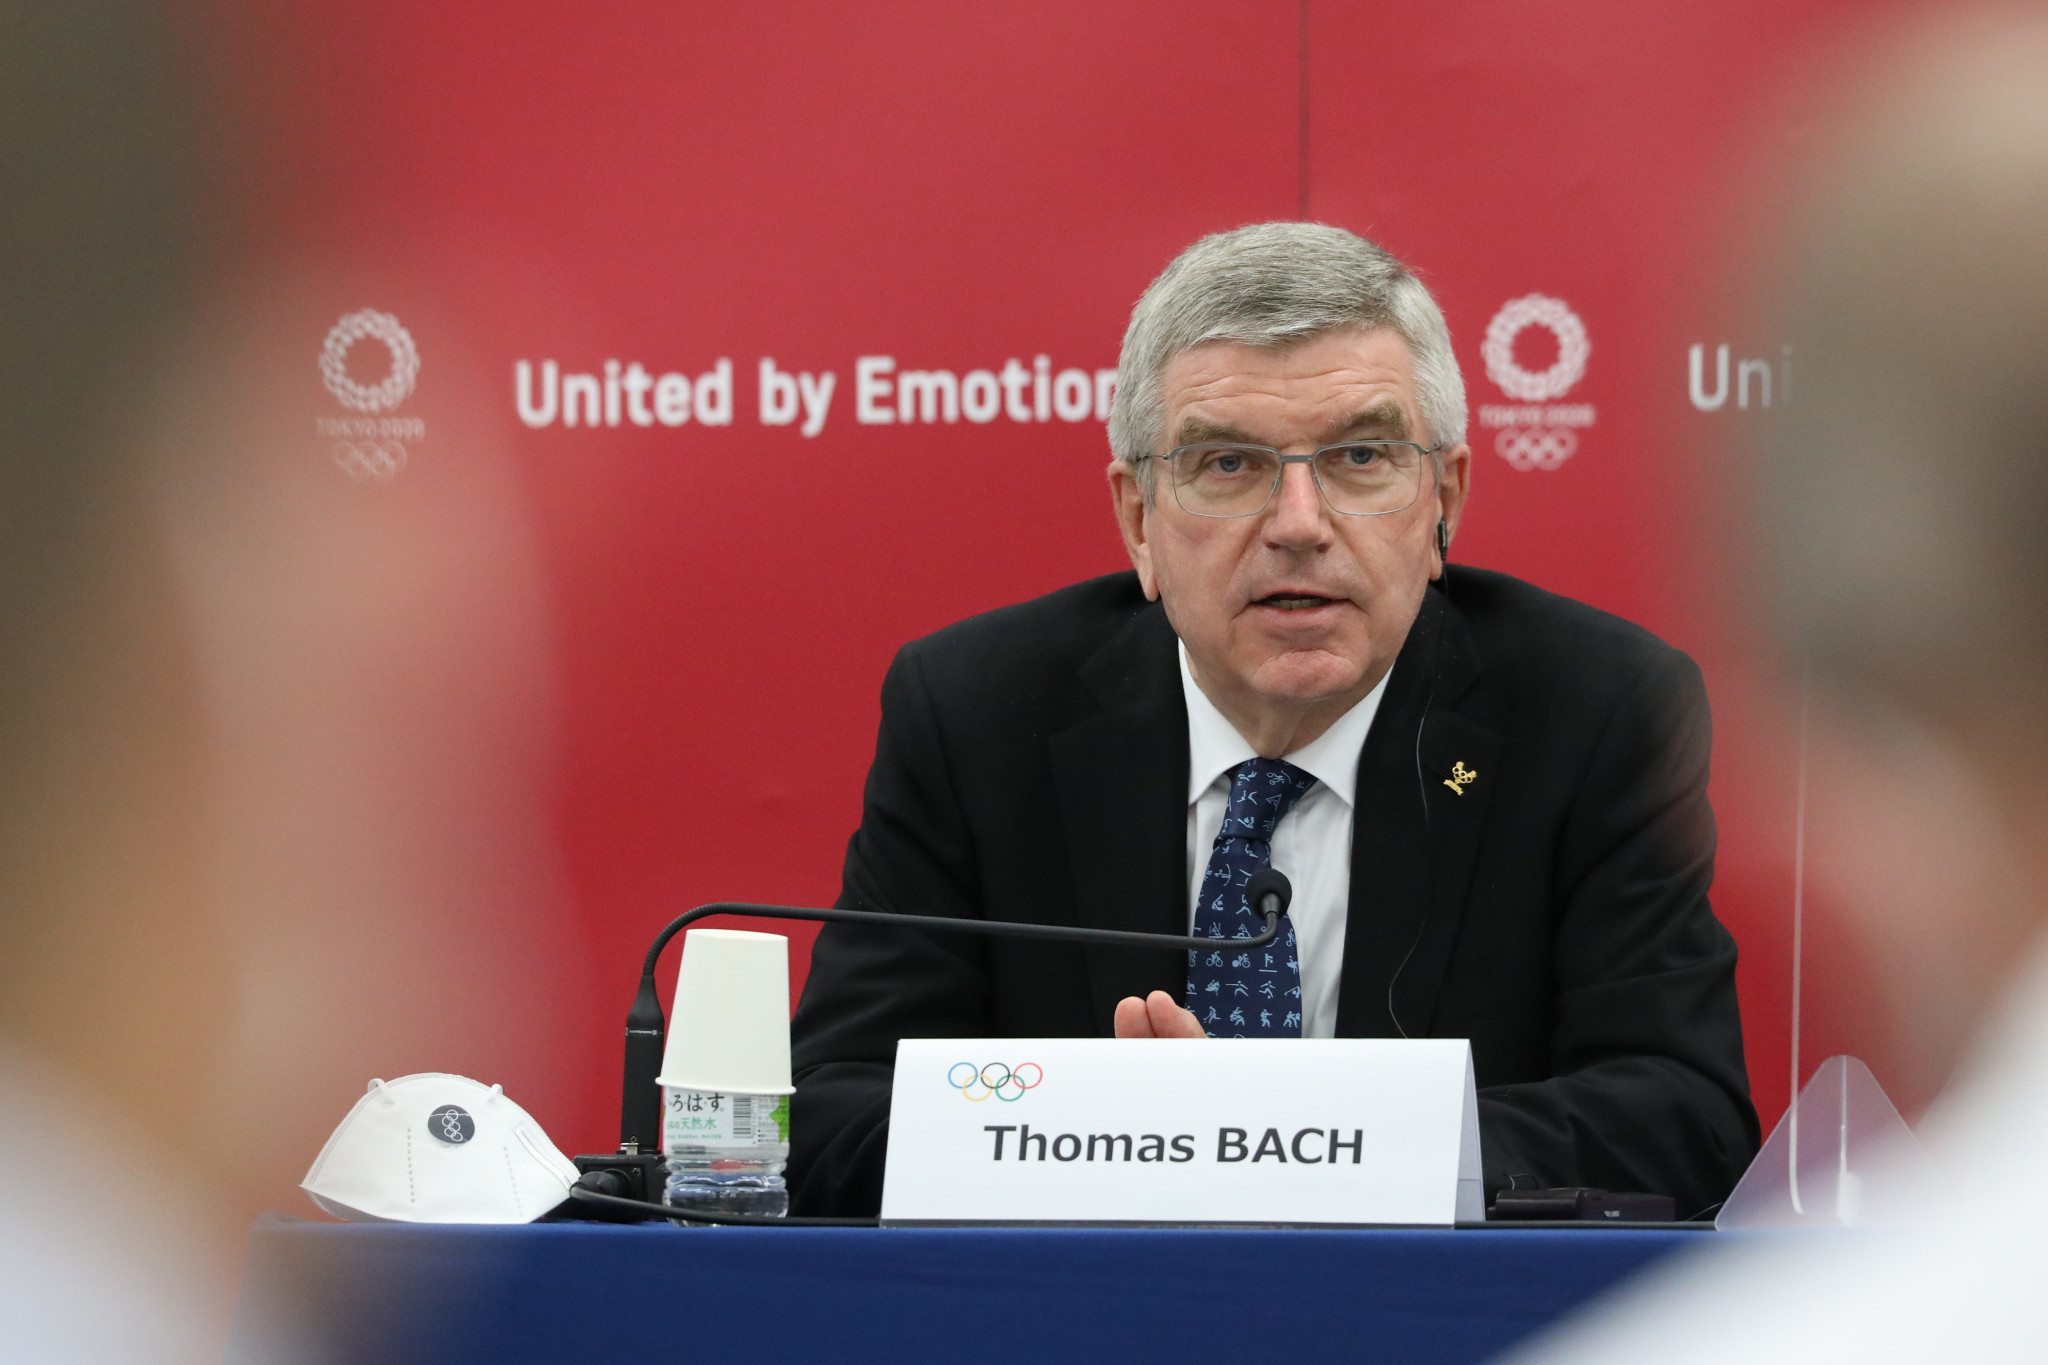 Thomas Bach claimed the IOC is 